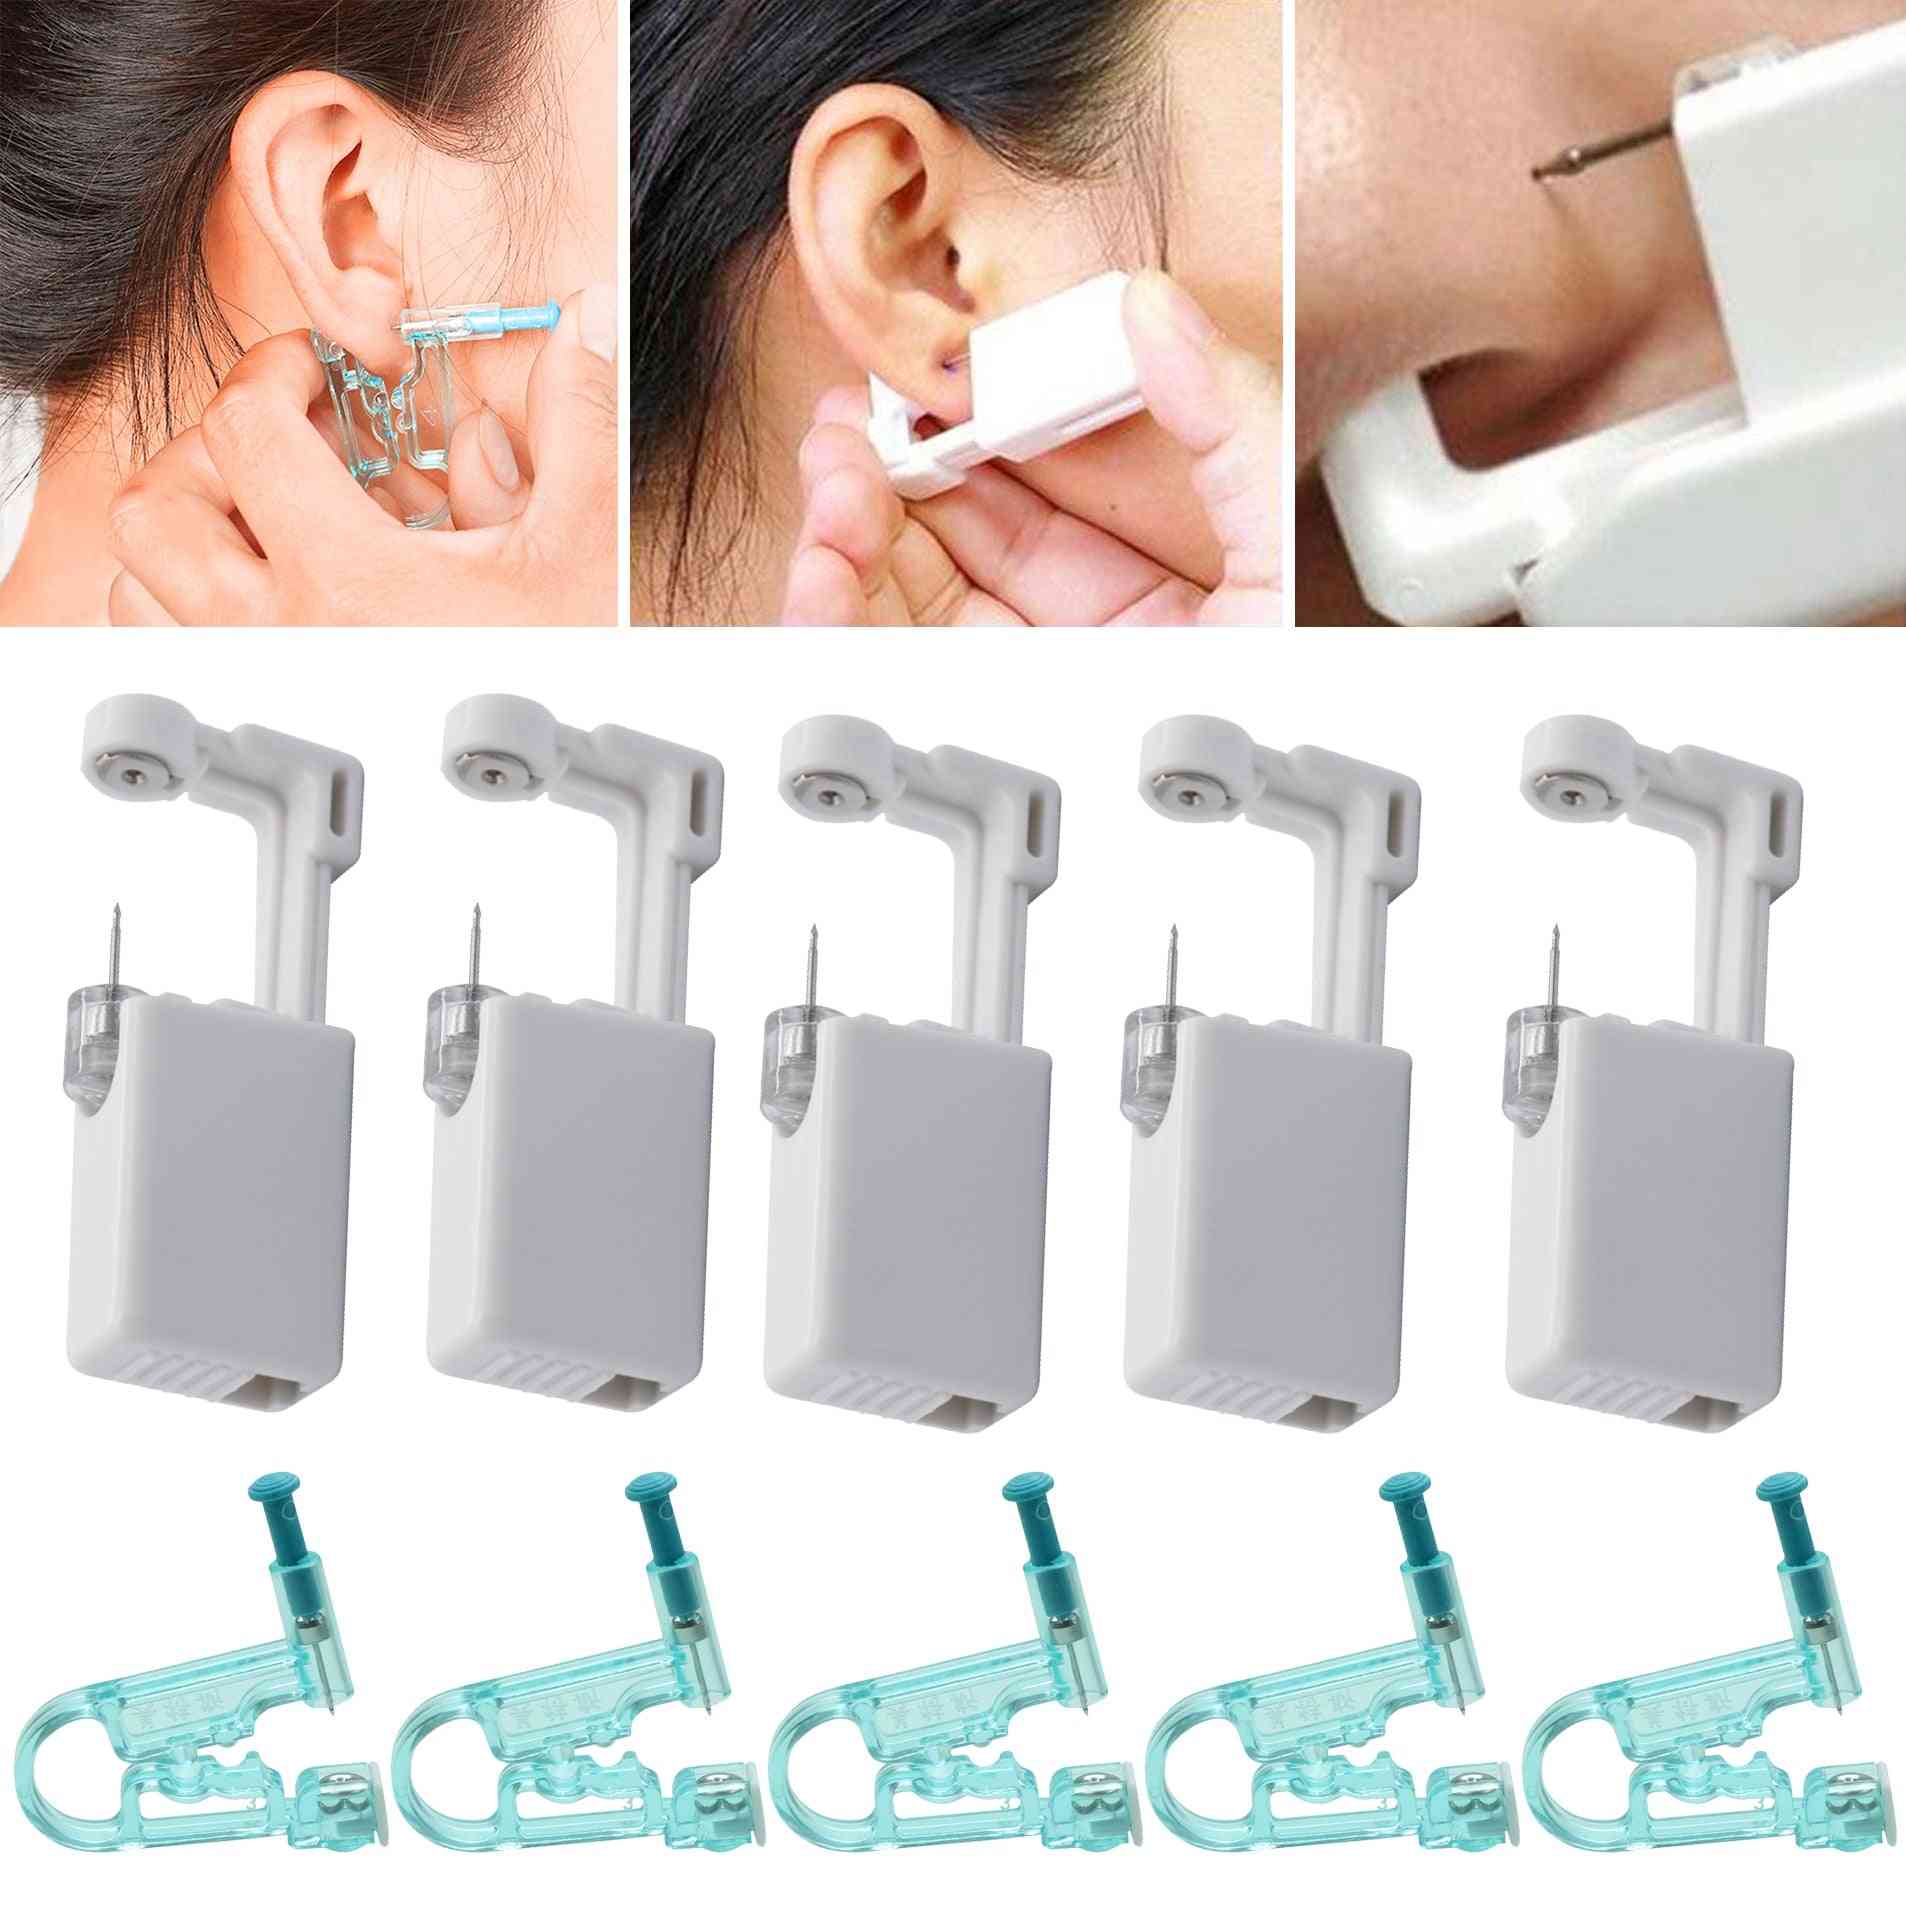 Ear Piercing Gun Kit Disposable Disinfect Safety Earring